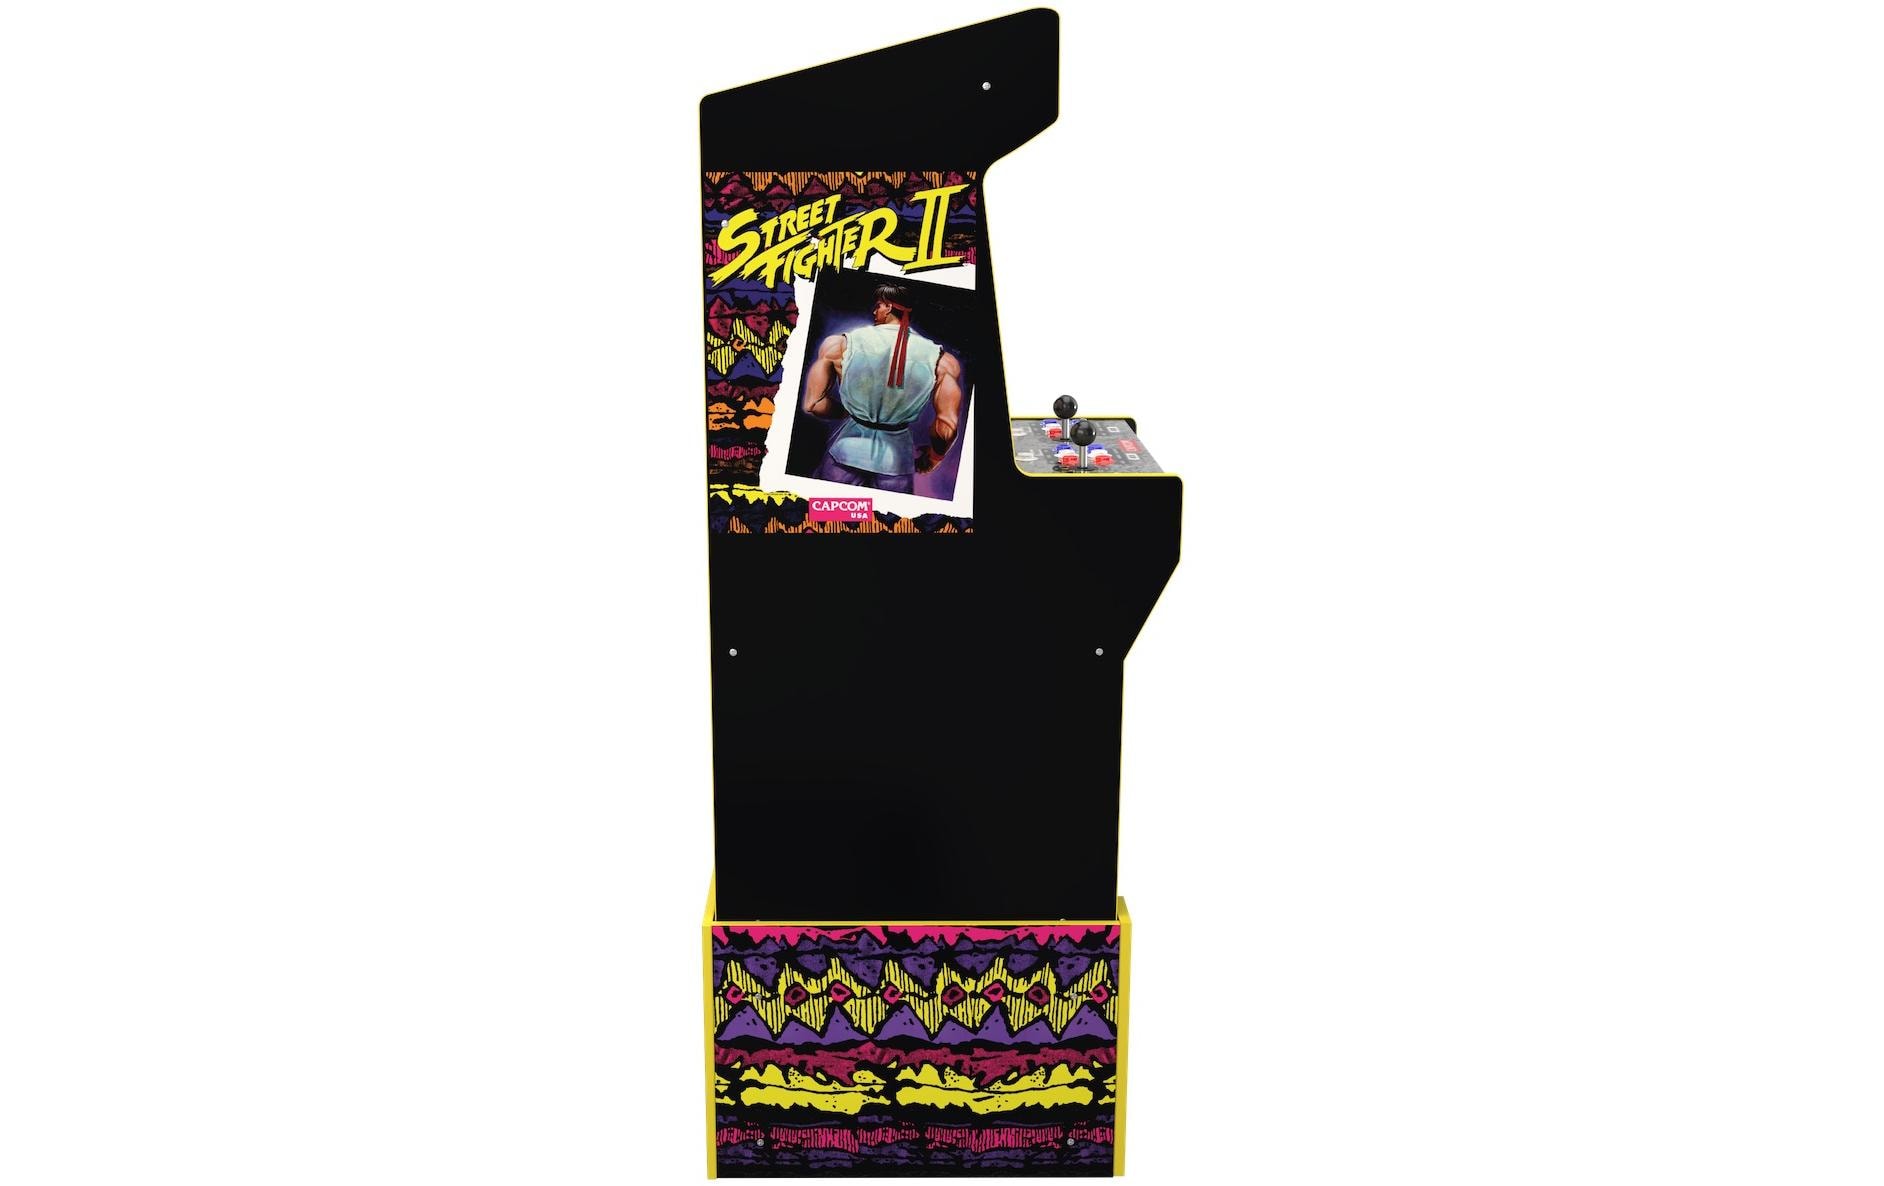 Arcade1Up Arcade-Automat Capcom Legacy Edition Street Fighter 2